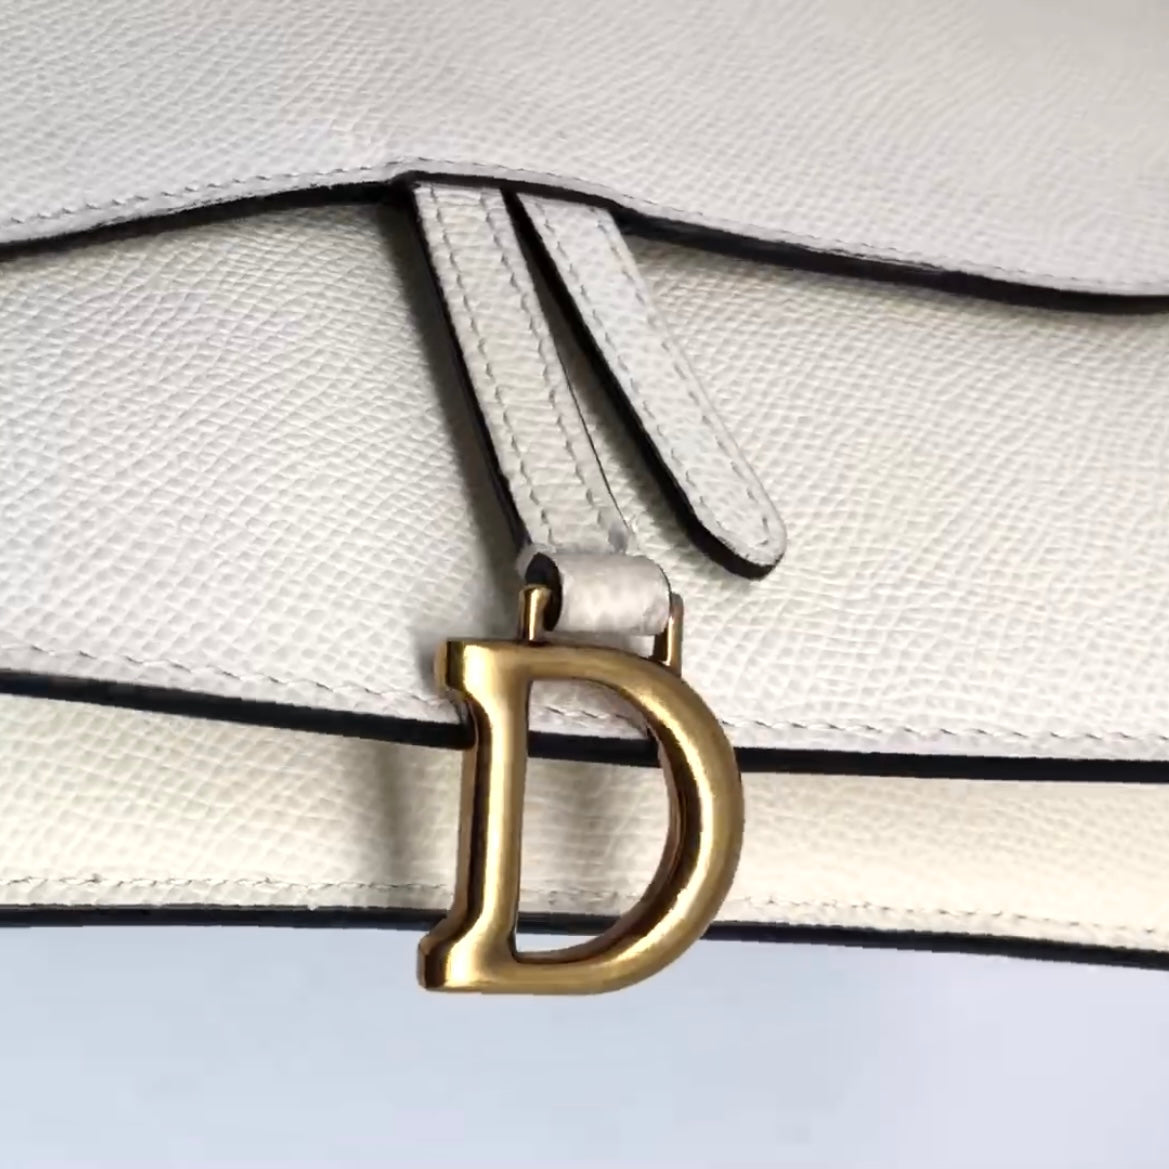 Christian Dior Saddle Bag 2019 HB3943 Second Hand Handbags Xupes   ozgurwoodscom